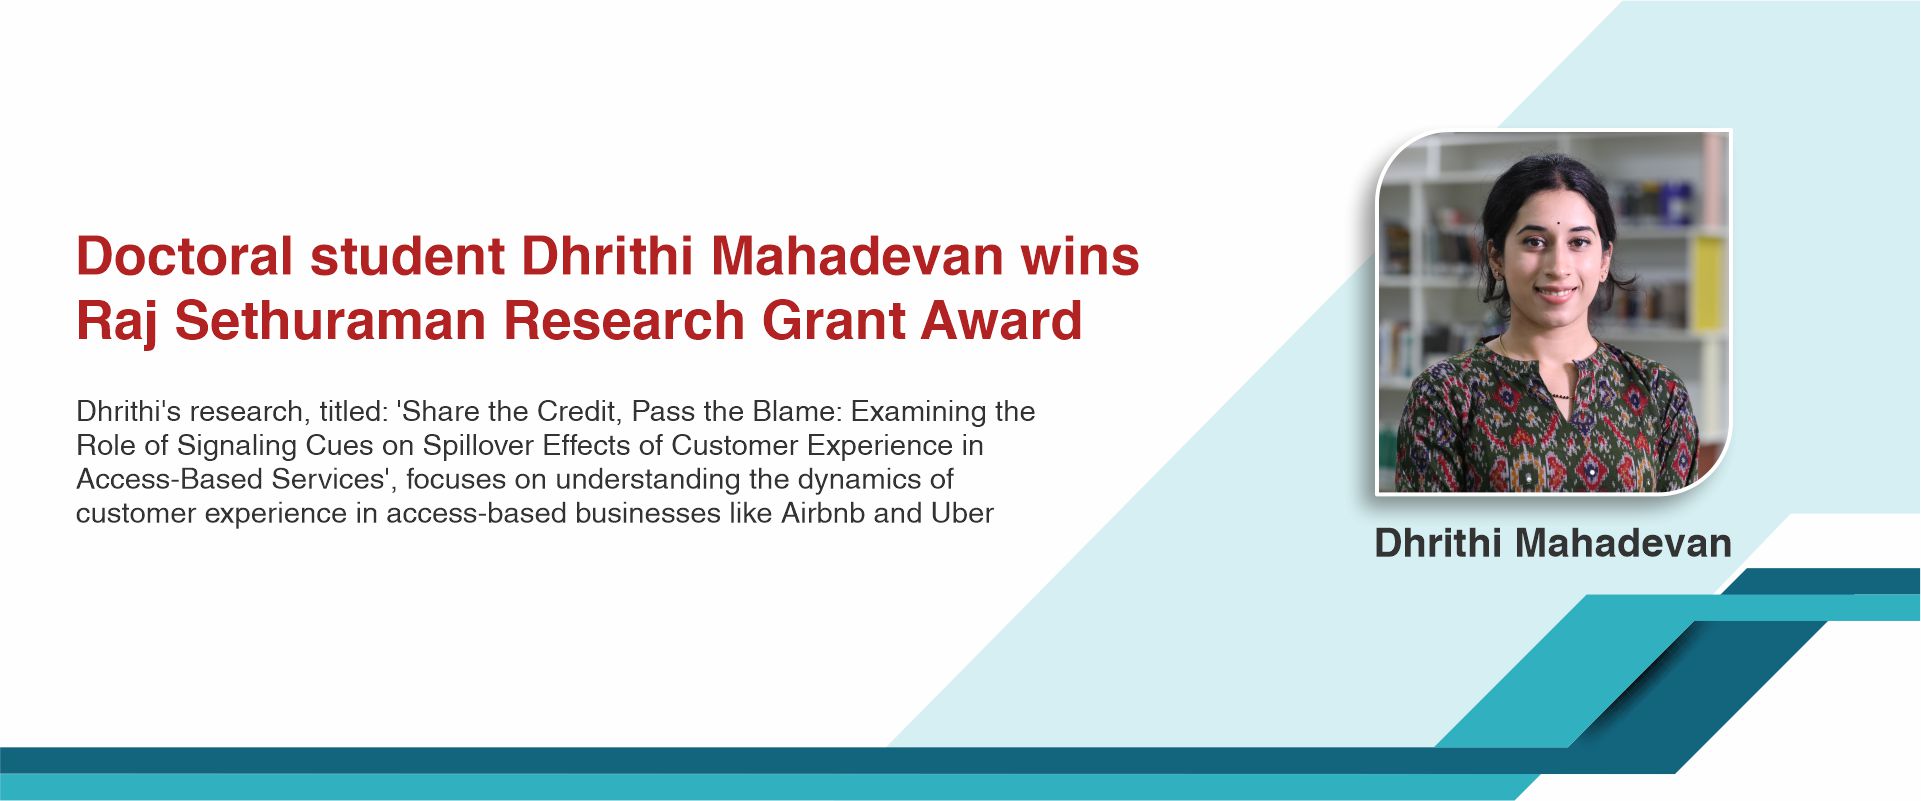 Doctoral student Dhrithi Mahadevan wins Raj Sethuraman Research Grant Award